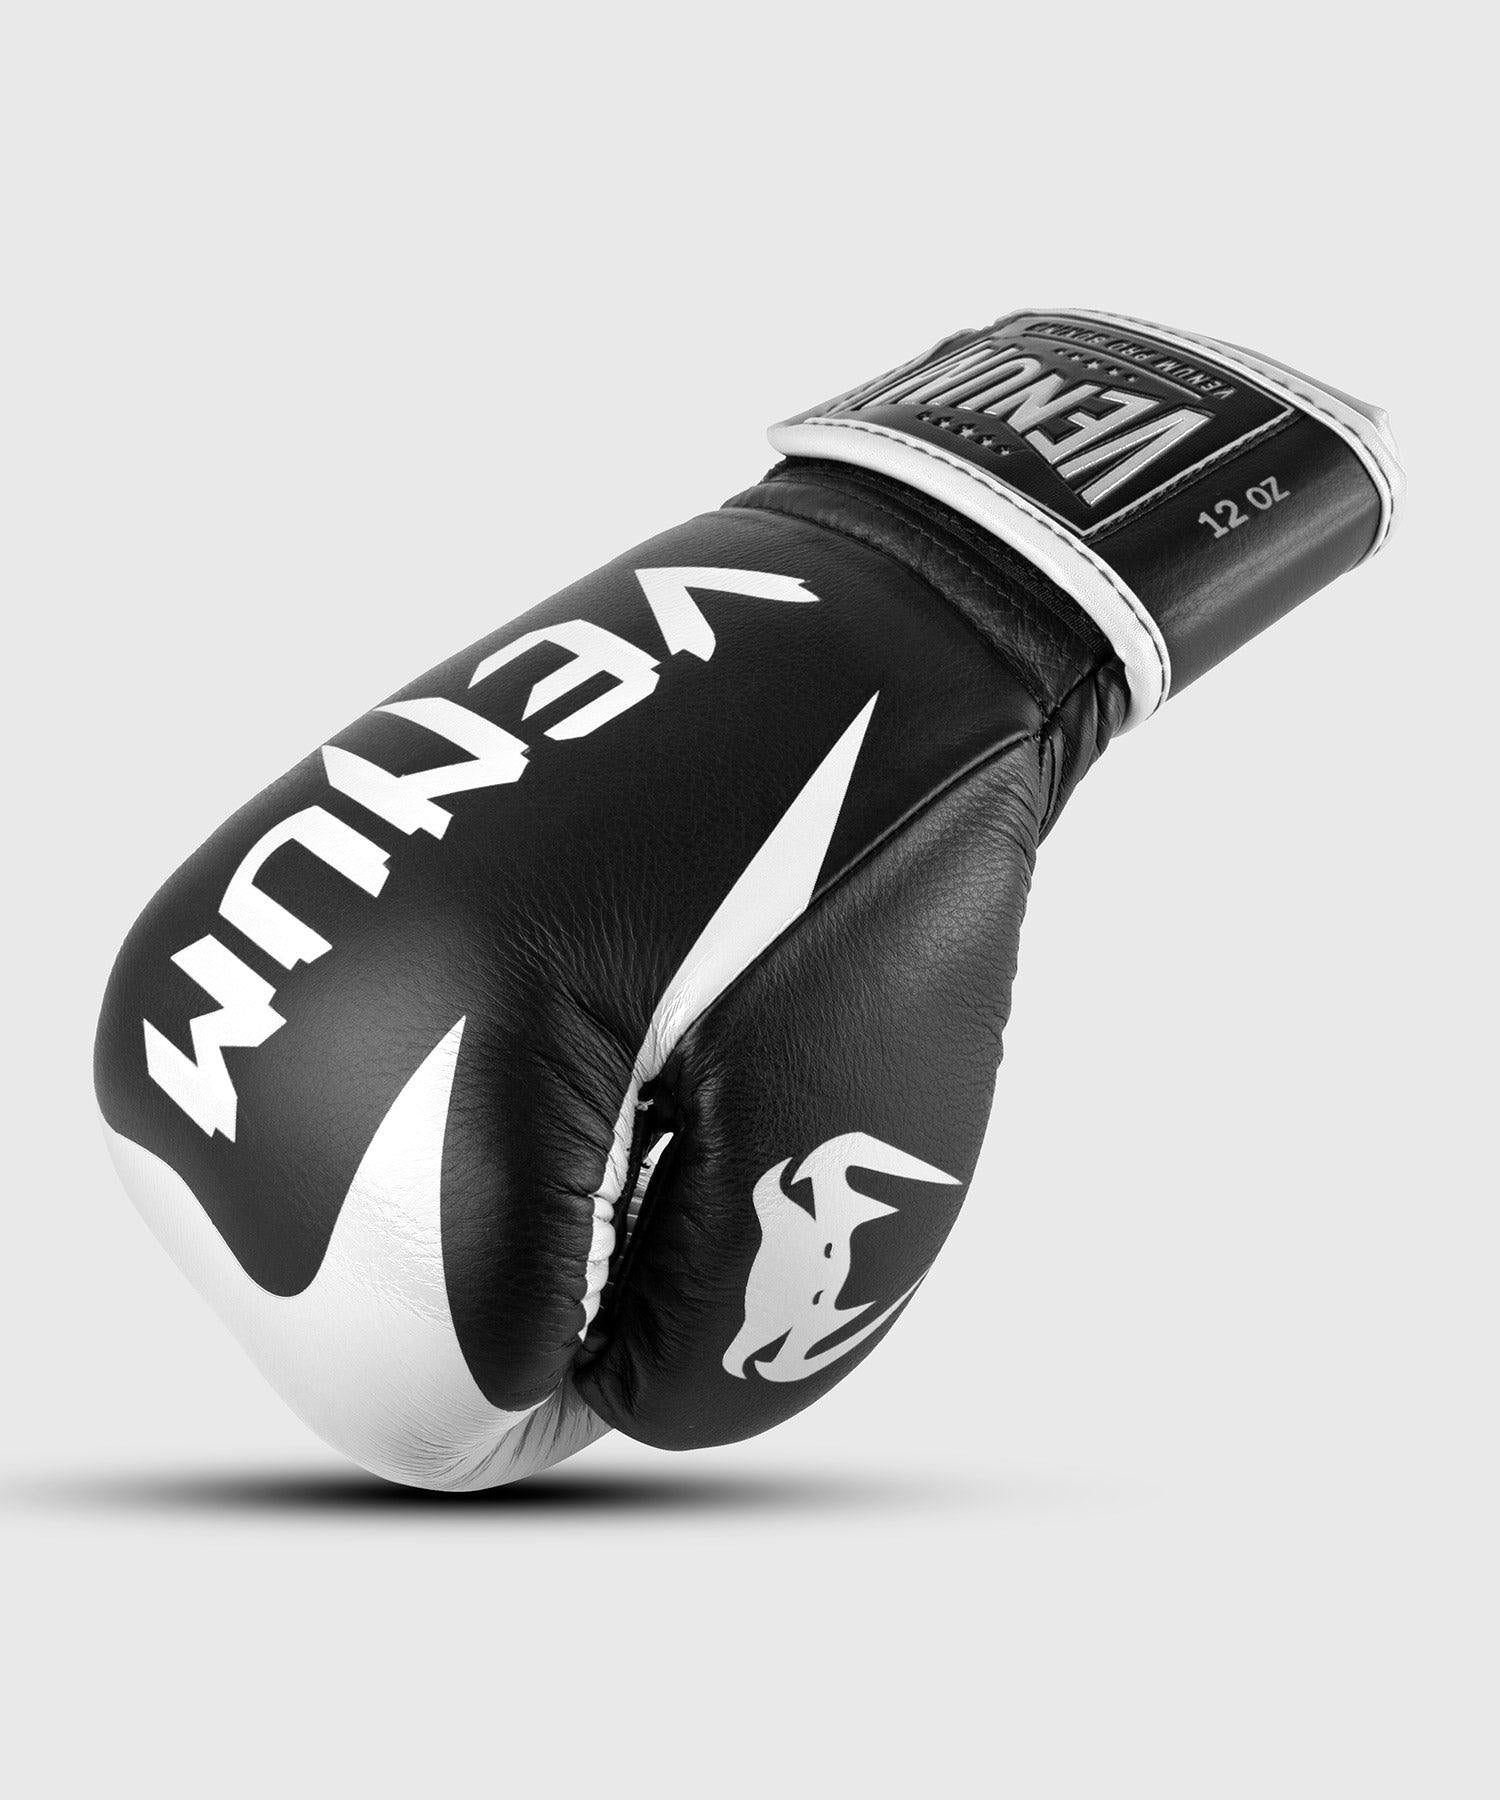 Venum Hammer Pro Boxing Gloves Velcro - Black/White Picture 1